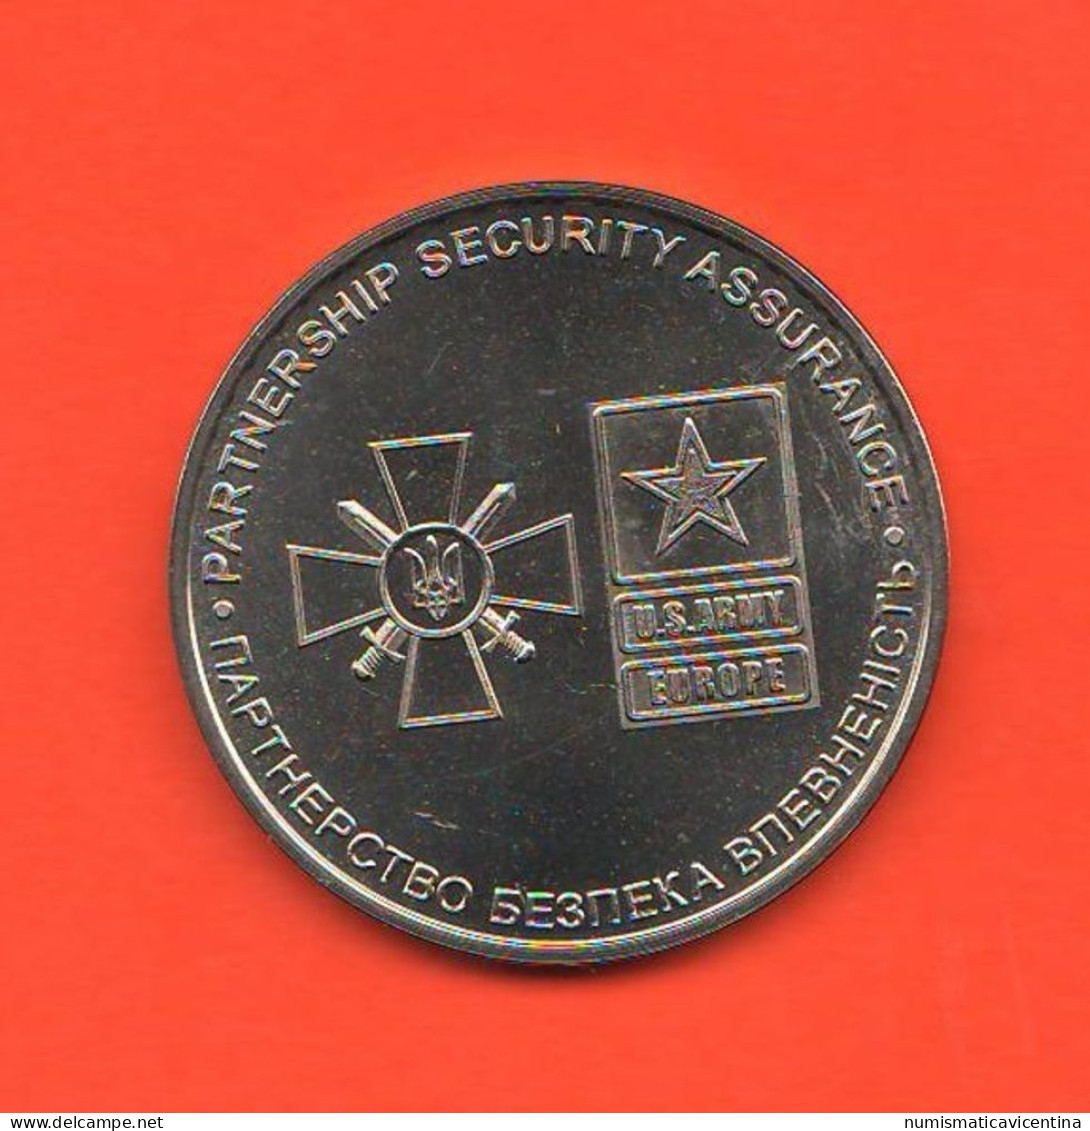 Saber Guardian Rapid Trident 2015 Ukraina Ucraine America Partnership Security Assurance Medal Medaille - Professionals/Firms